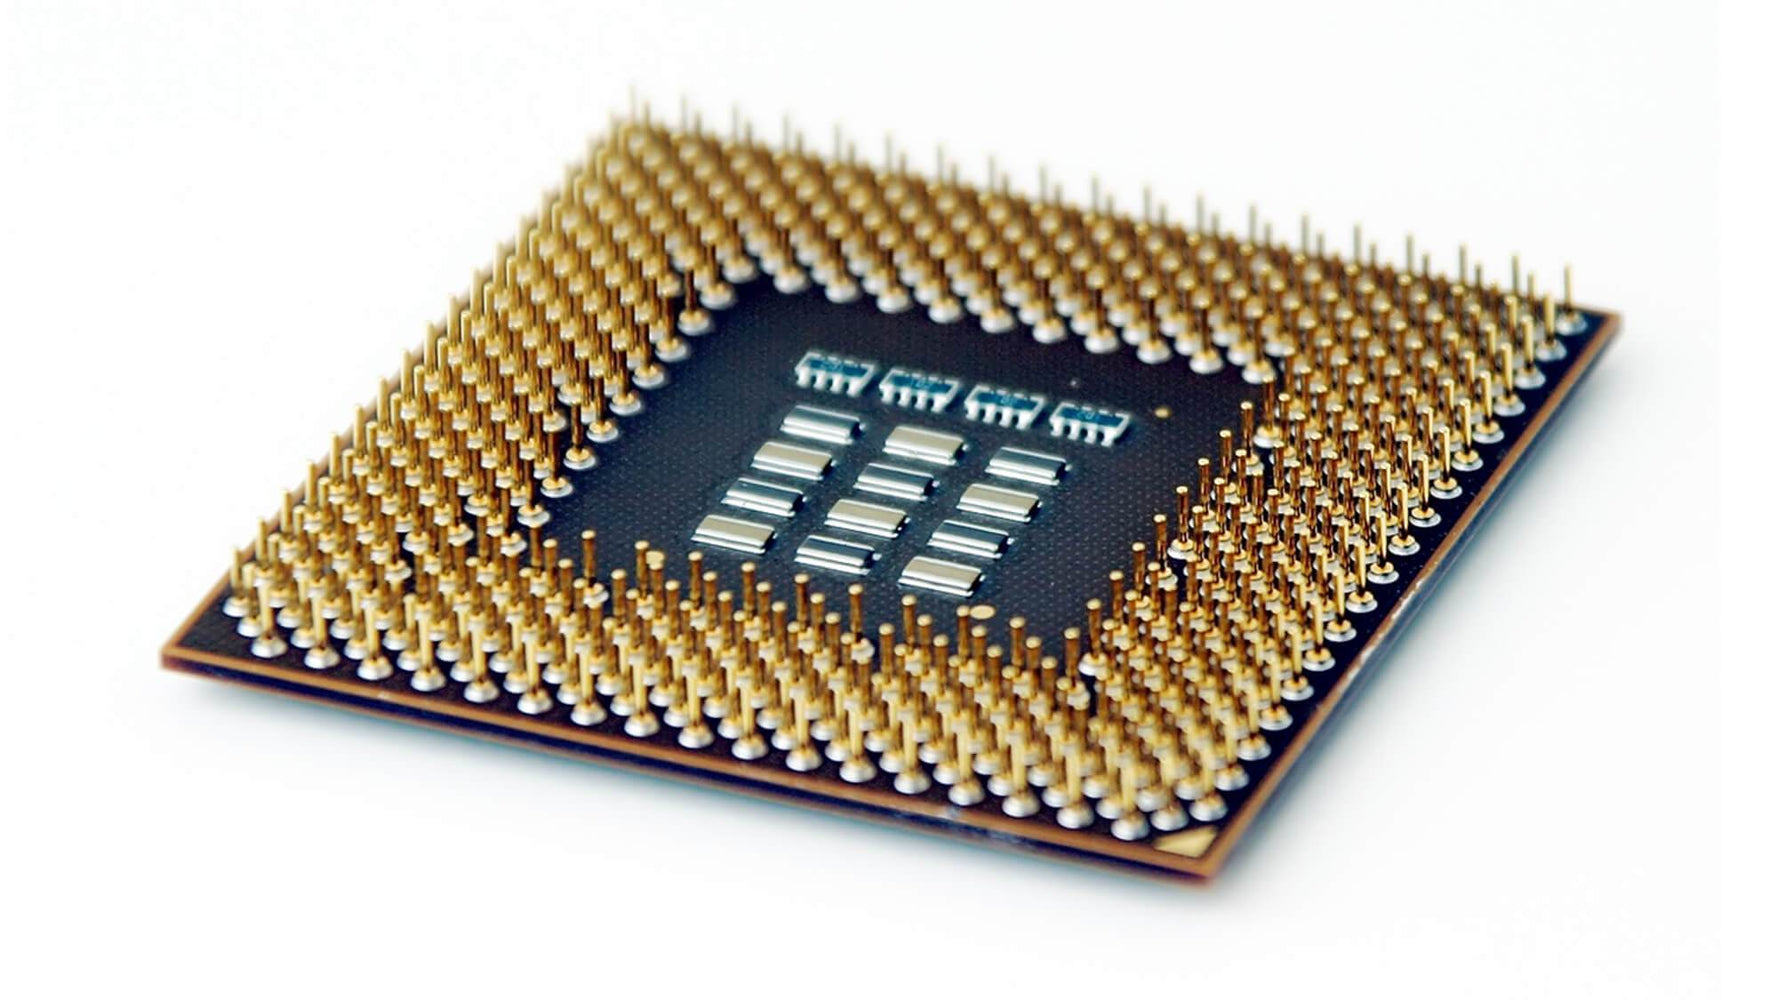 XJ848 - Dell 3.00GHz 800MHz FSB 4MB L2 Cache Intel Pentium D Dual Core 930 Processor